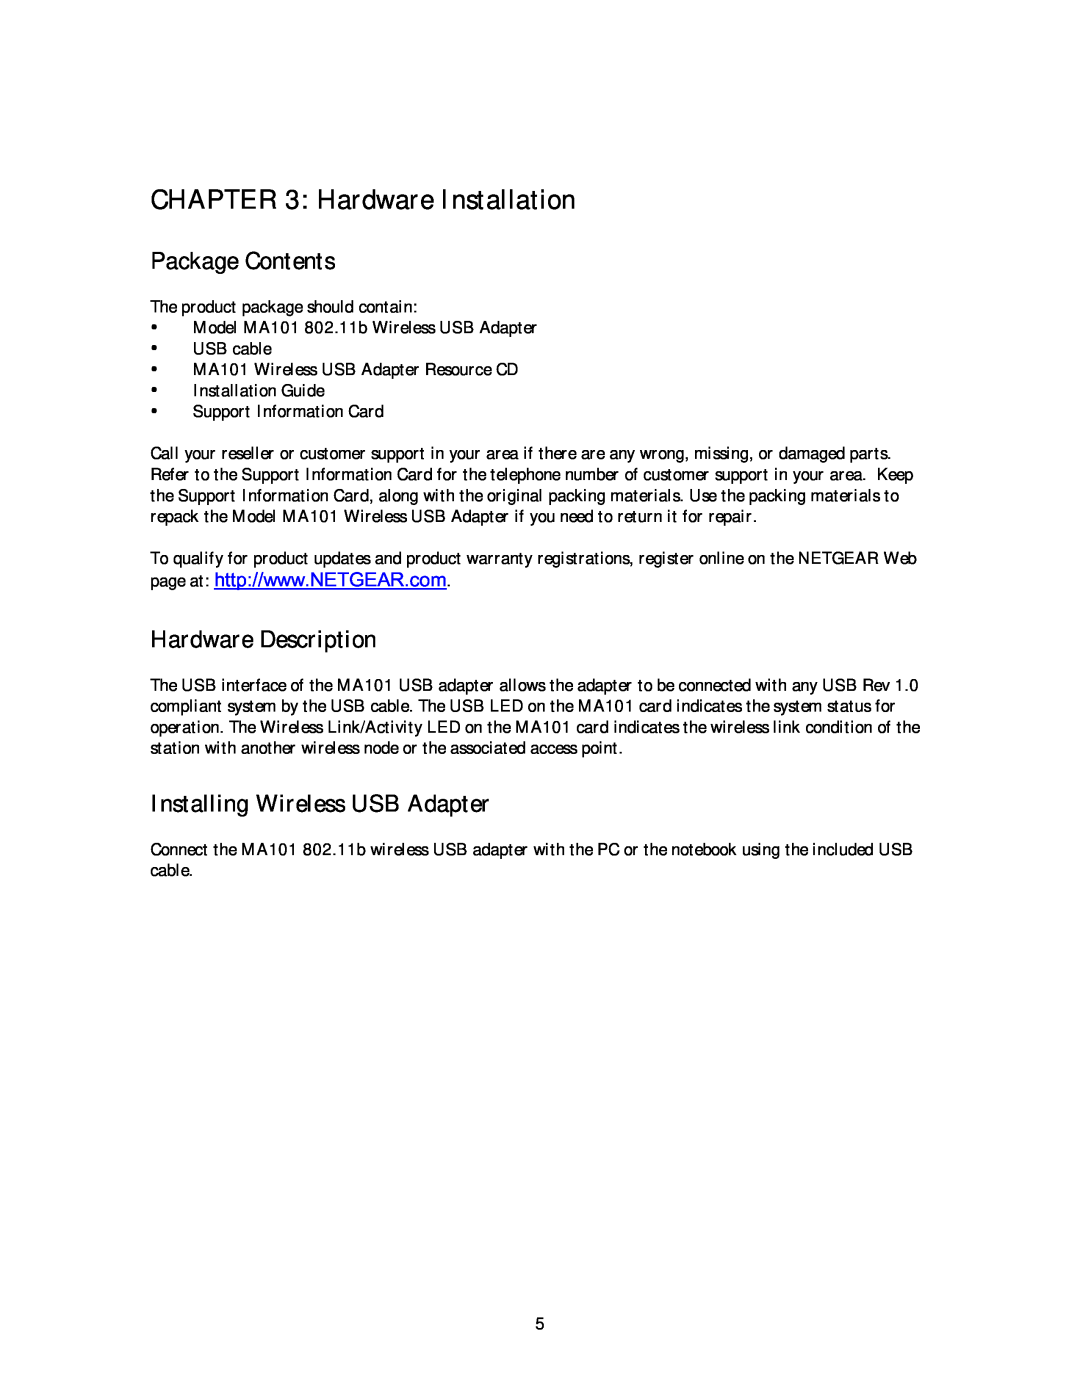 NETGEAR MA 101 manual Hardware Installation, Package Contents, Hardware Description, Installing Wireless USB Adapter 